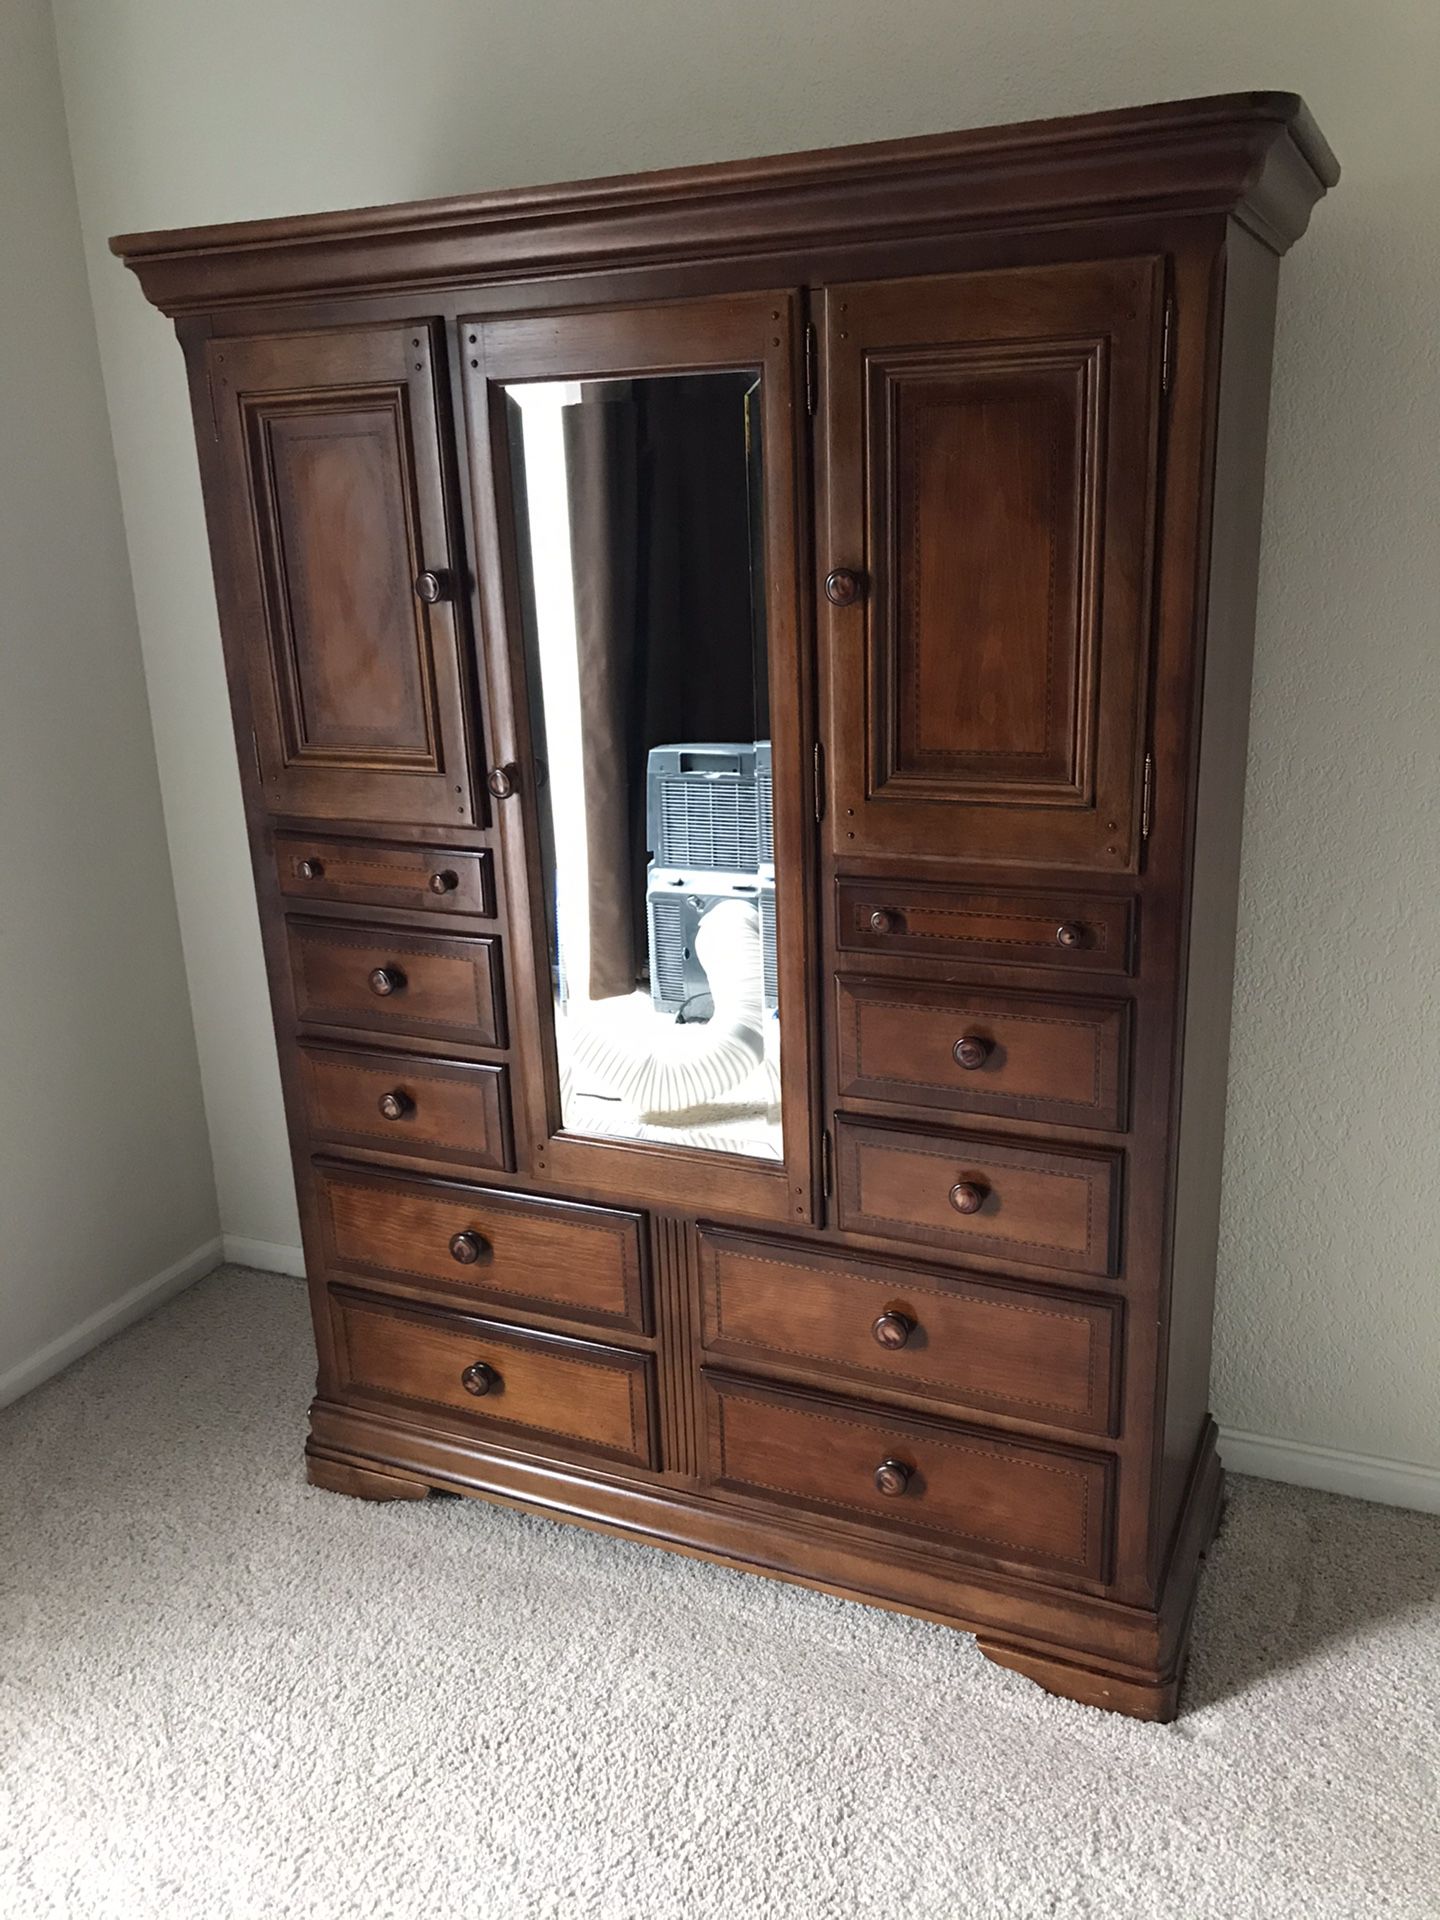 Armoire dresser & matching nightstands